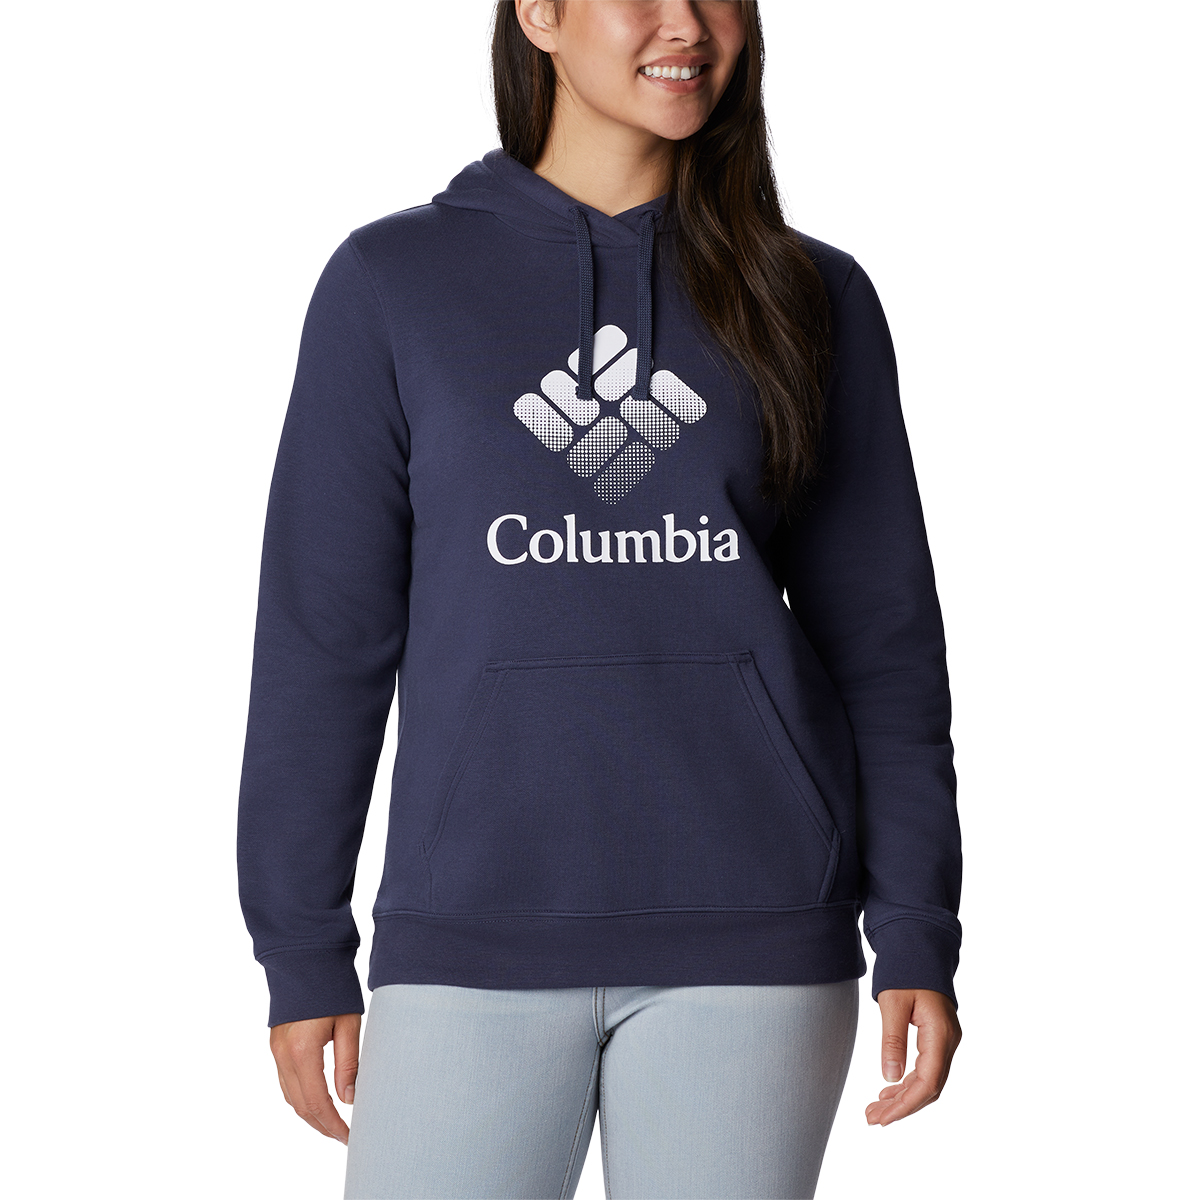 Columbia Women's Trek Graphic Hoodie - Size S